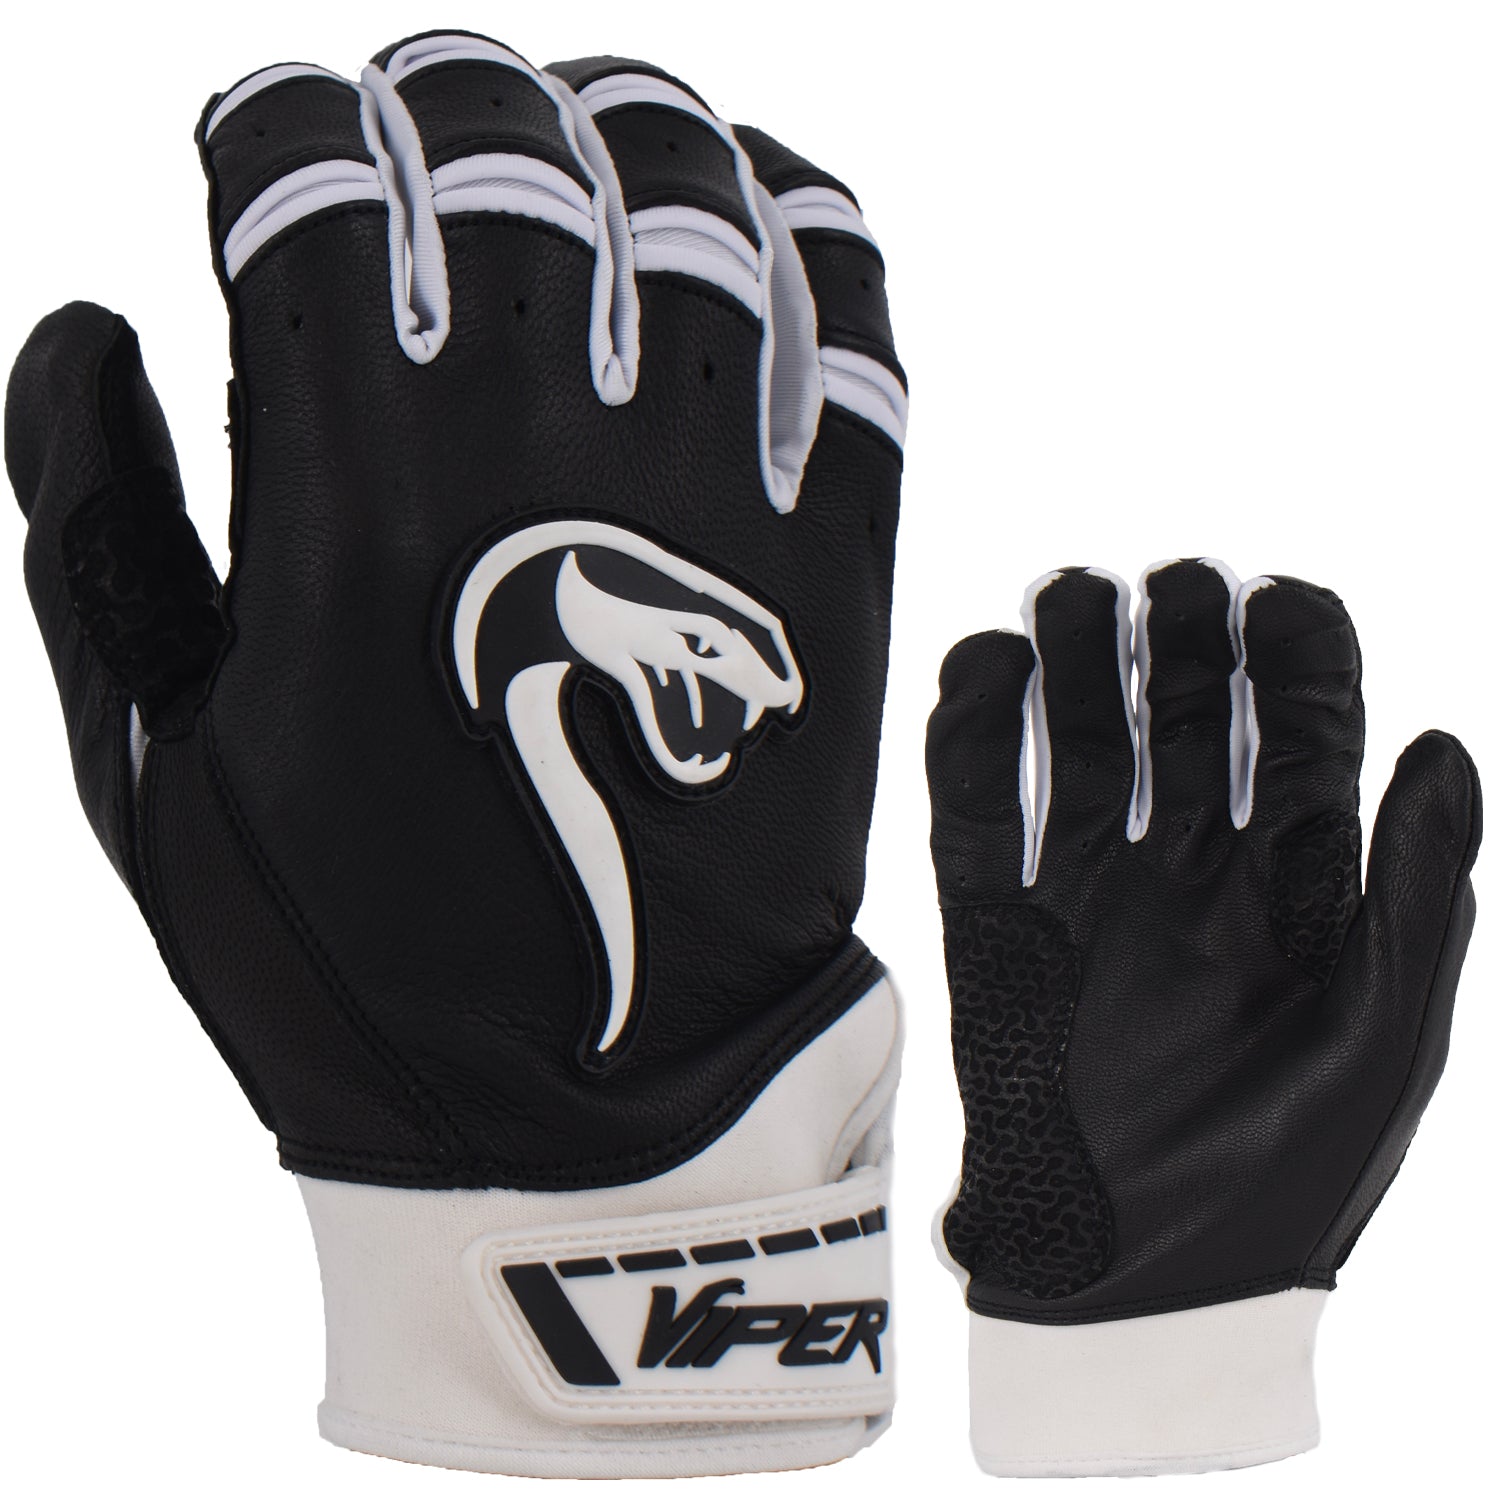 Viper Grindstone Short Cuff Batting Glove - Black/White